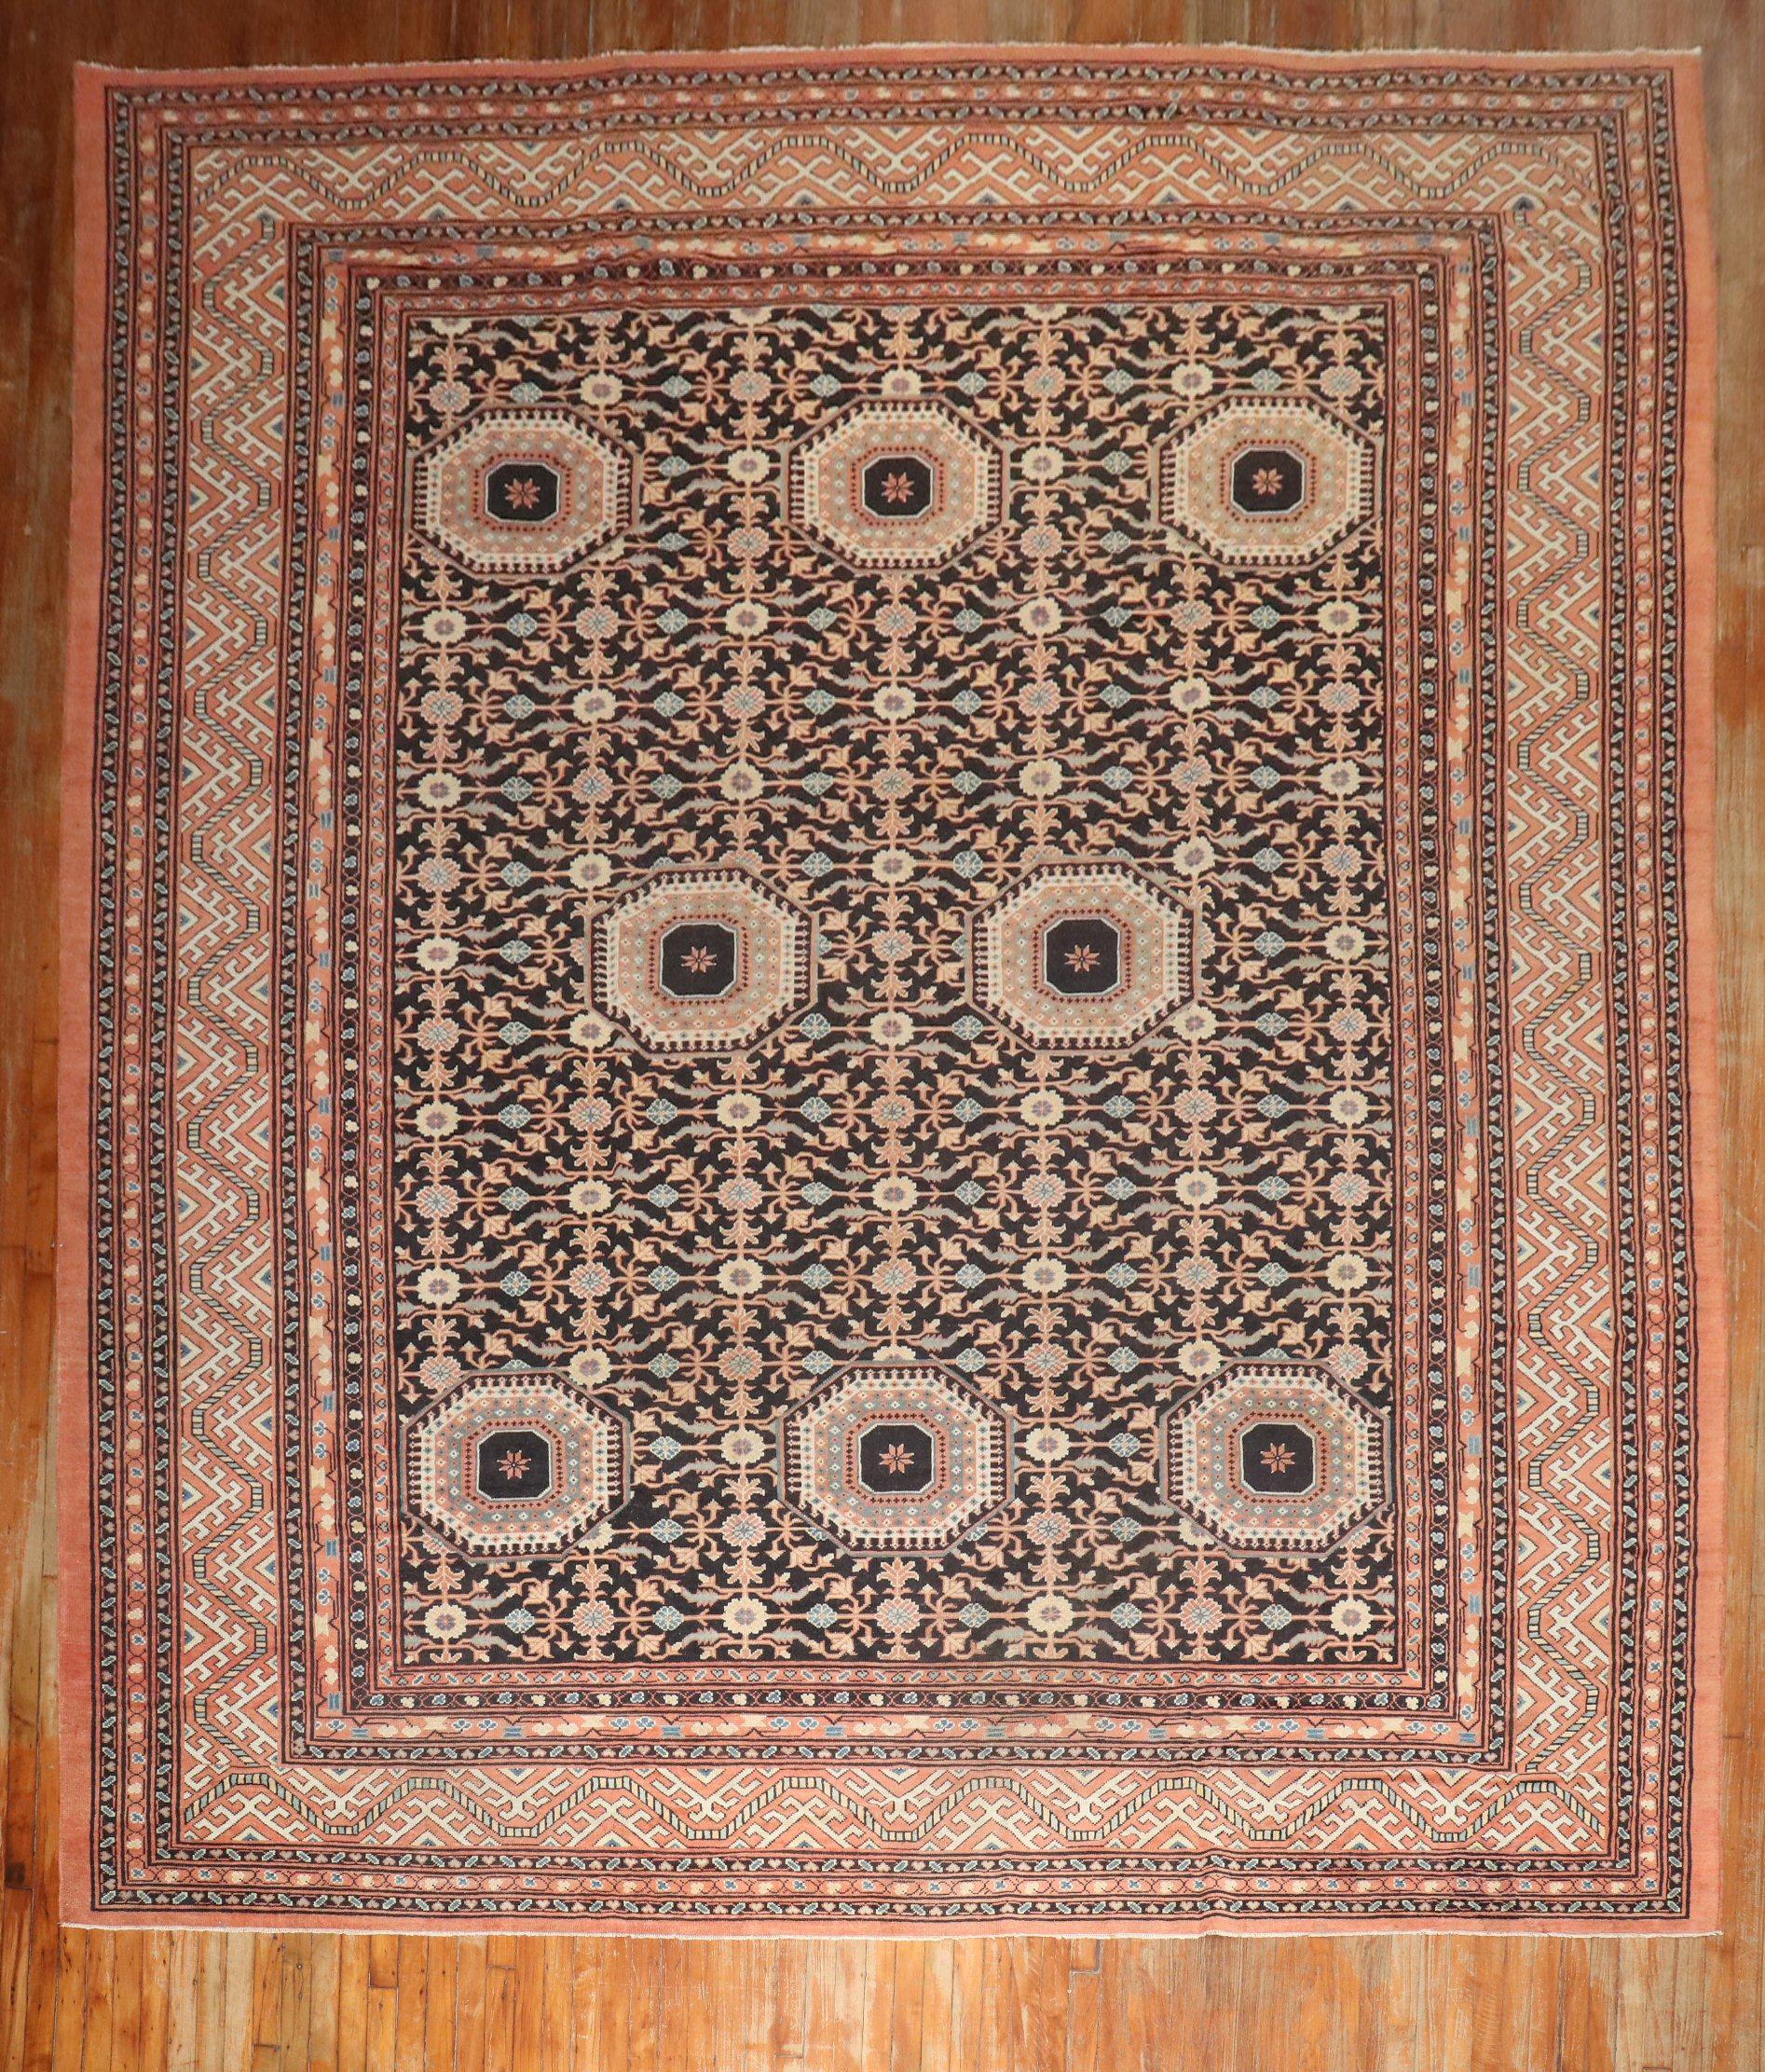 3rd quarter of the 20th Century large room size Samarkand East Tiurkestan Rug

rug no.	j3320
size	11' x 14' 7